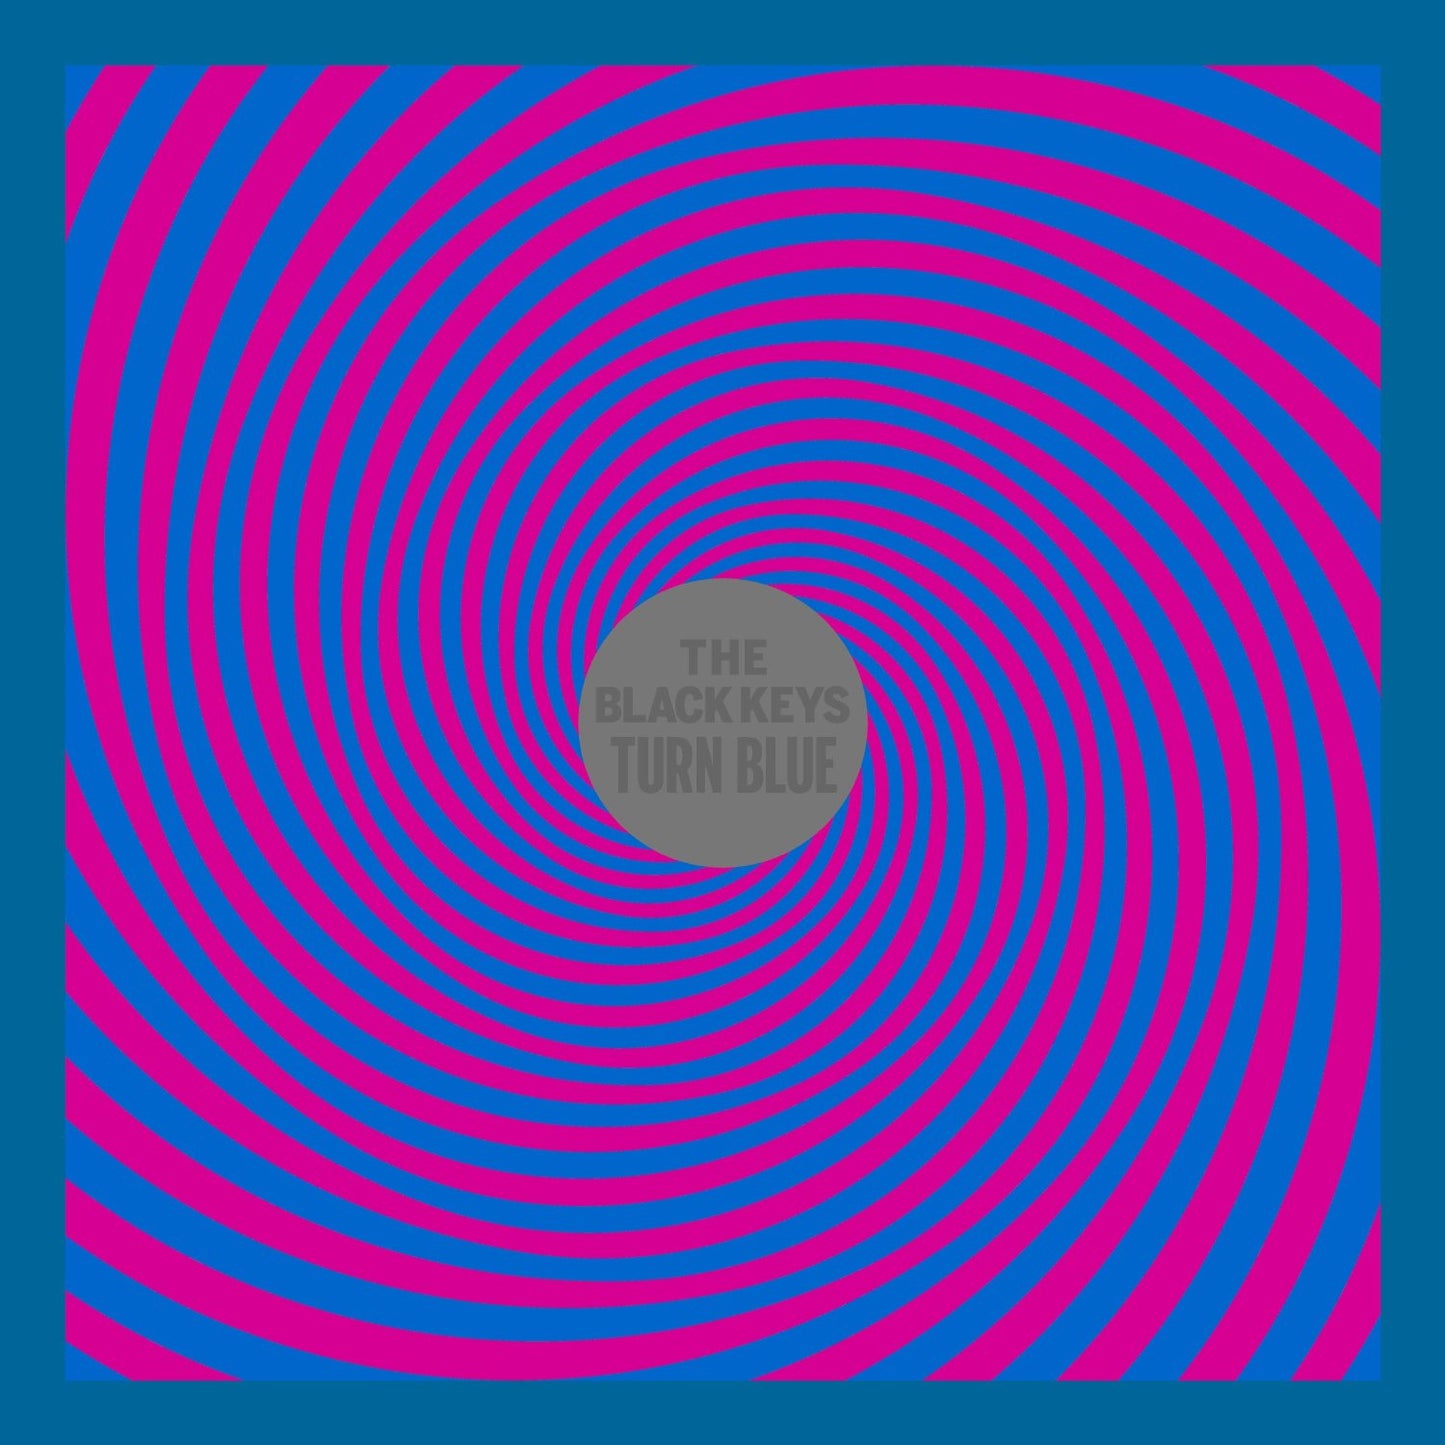 The Black Keys - Turn Blue (Vinyl)